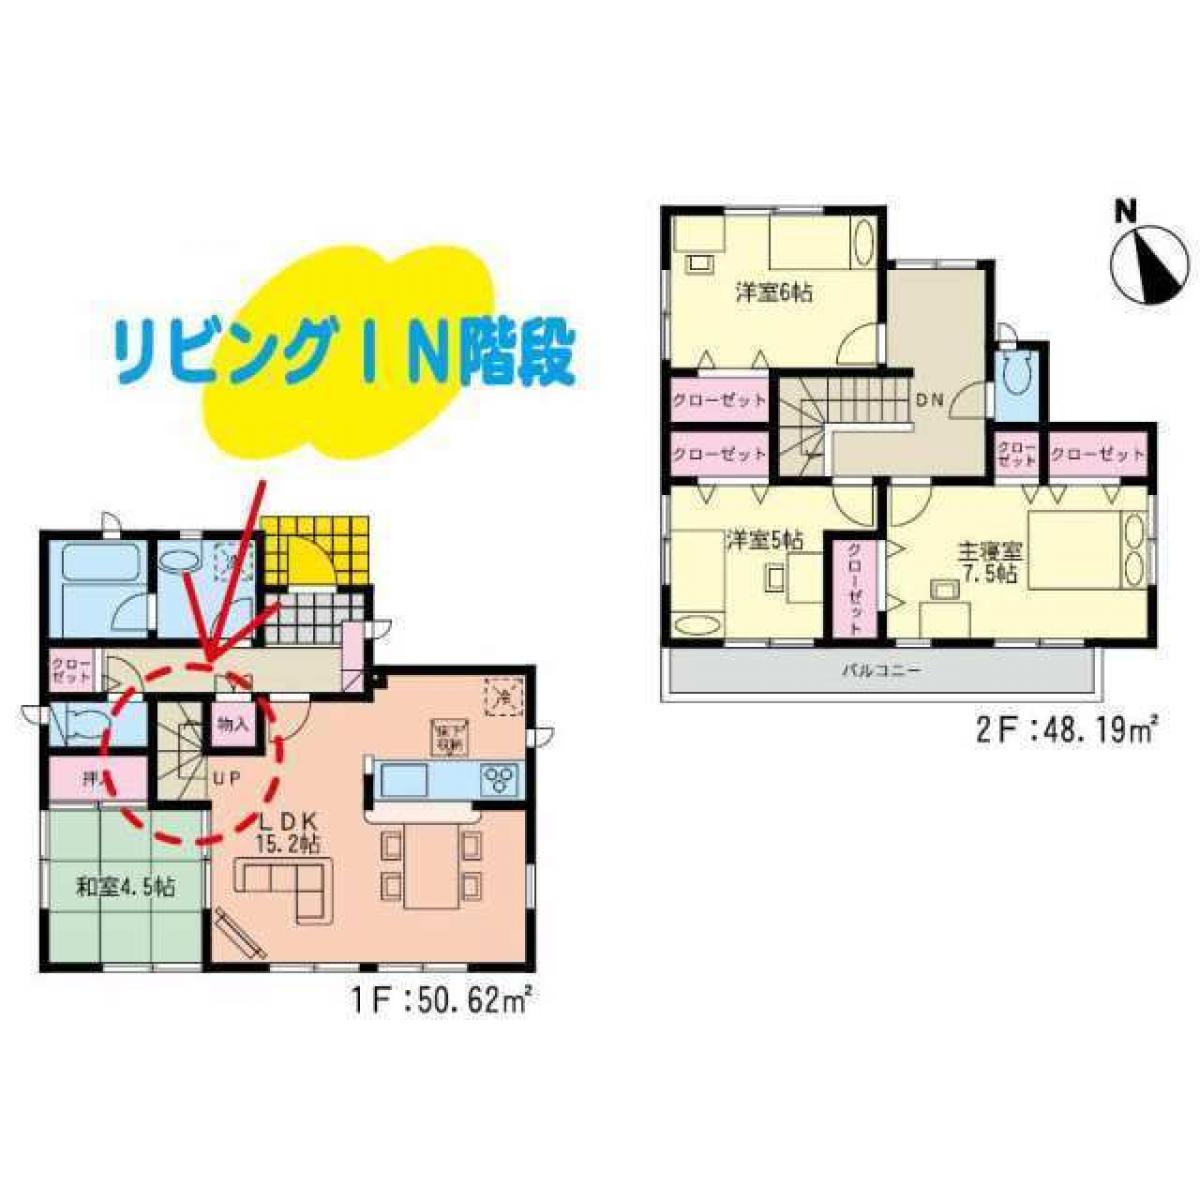 Picture of Home For Sale in Fukutsu Shi, Fukuoka, Japan